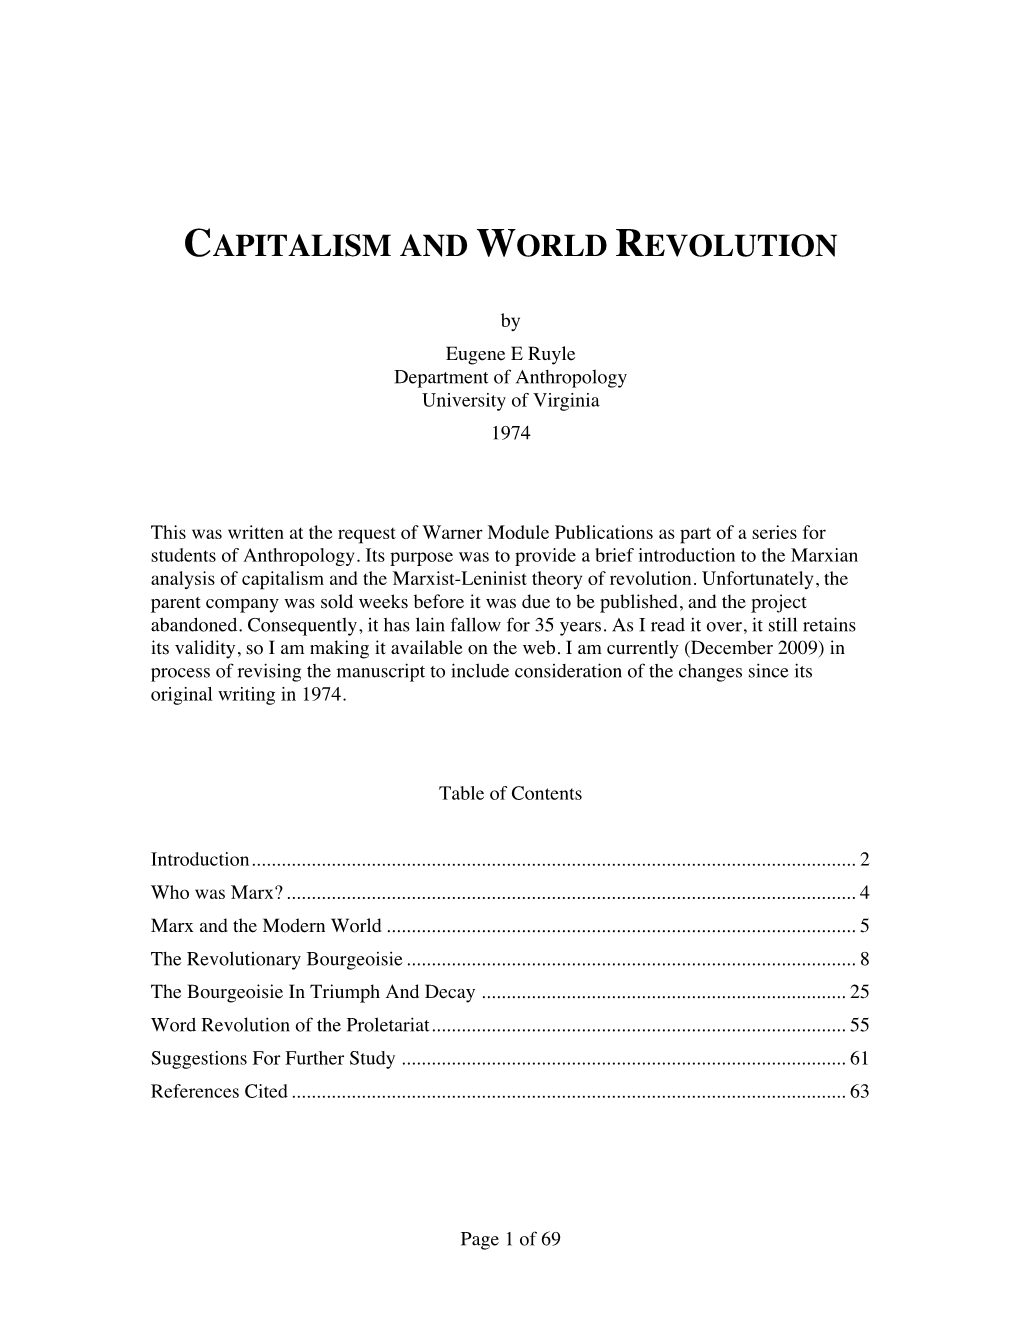 Capitalism and World Revolution (1974)